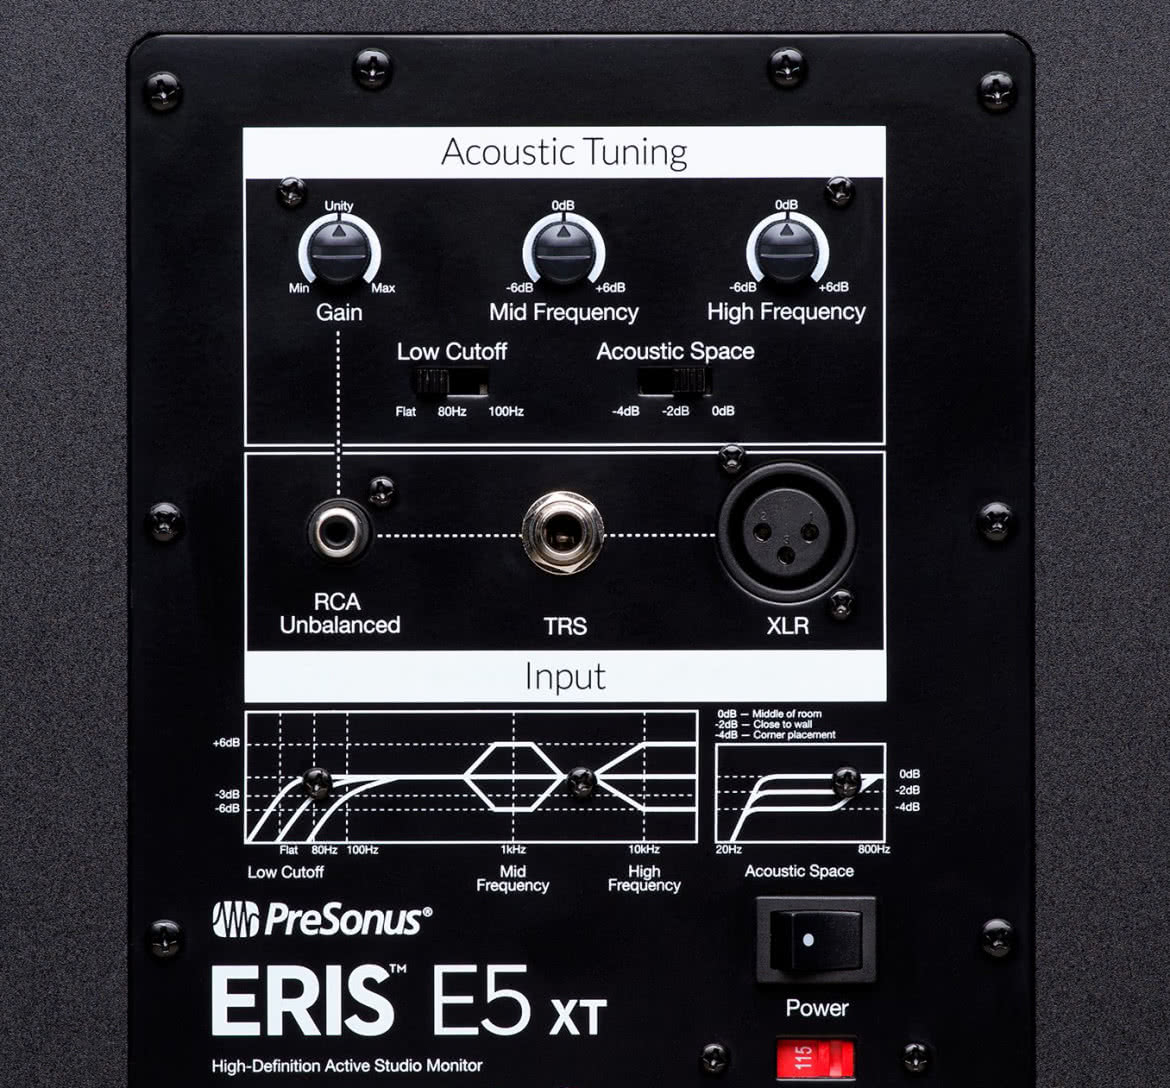 Eris E5 XT - monitory bliskiego pola